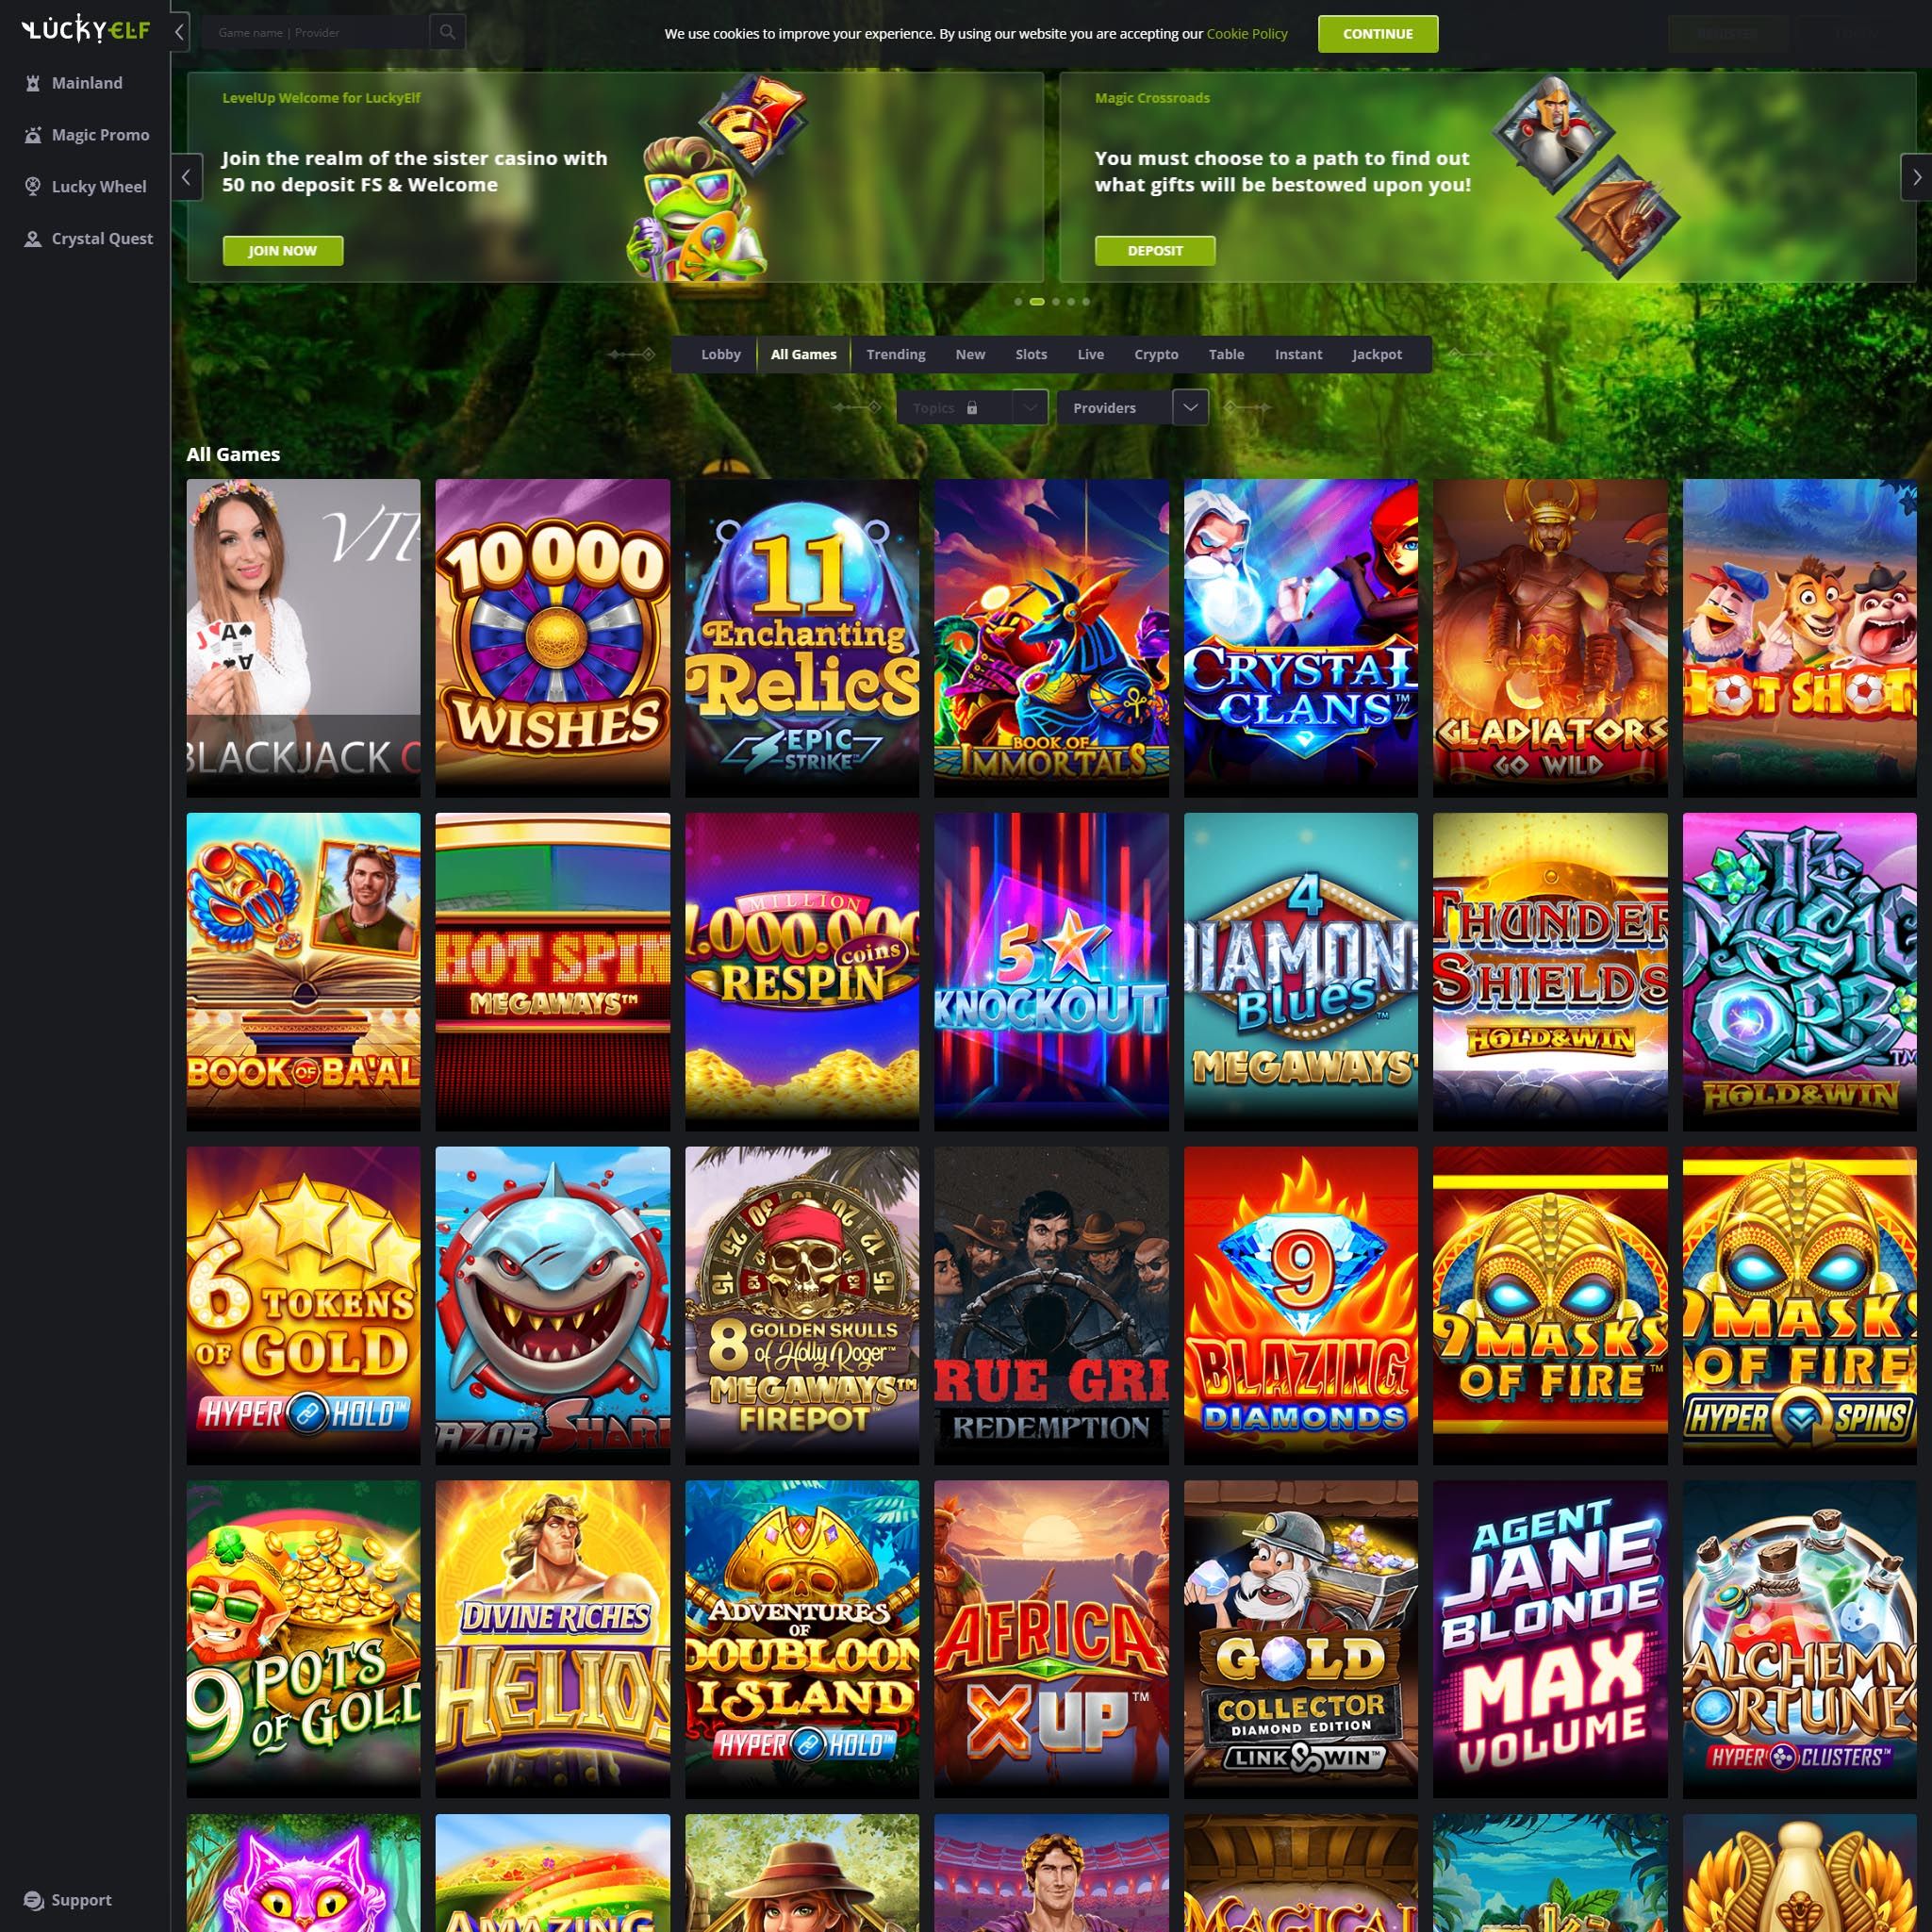 Luckyelf Casino full games catalogue